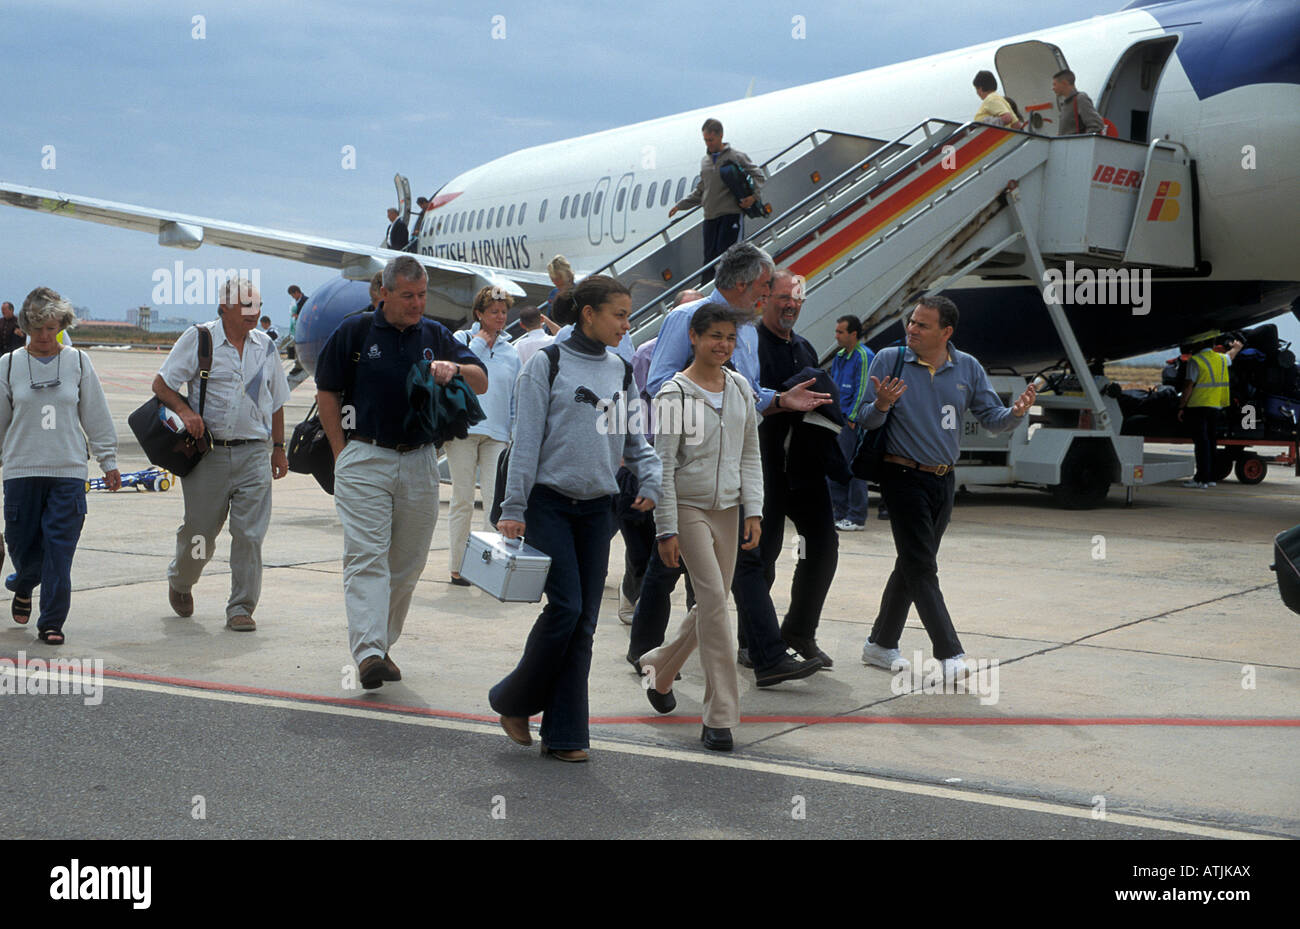 2 teenage girls disembarking aeroplane at Murcia airport with other passengers Stock Photo